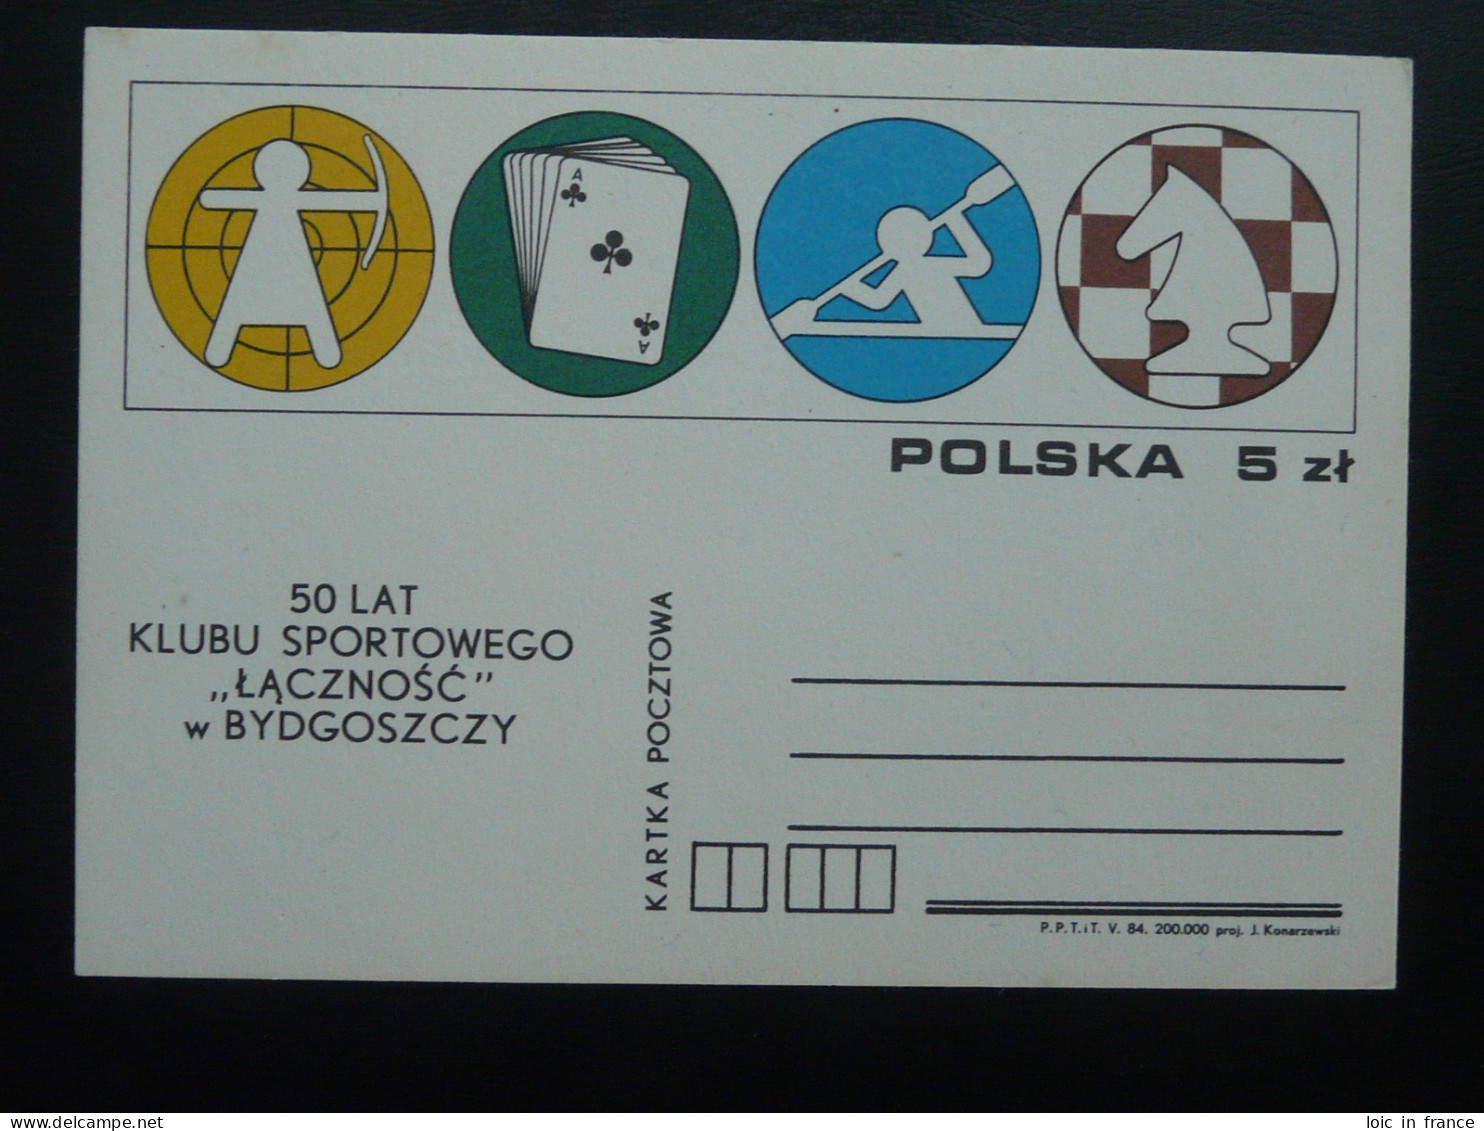 Entier Postal Stationery Card Tir à L'arc Archery Aviron Rowing échecs Chess Pologne Poland 1984 - Tir à L'Arc